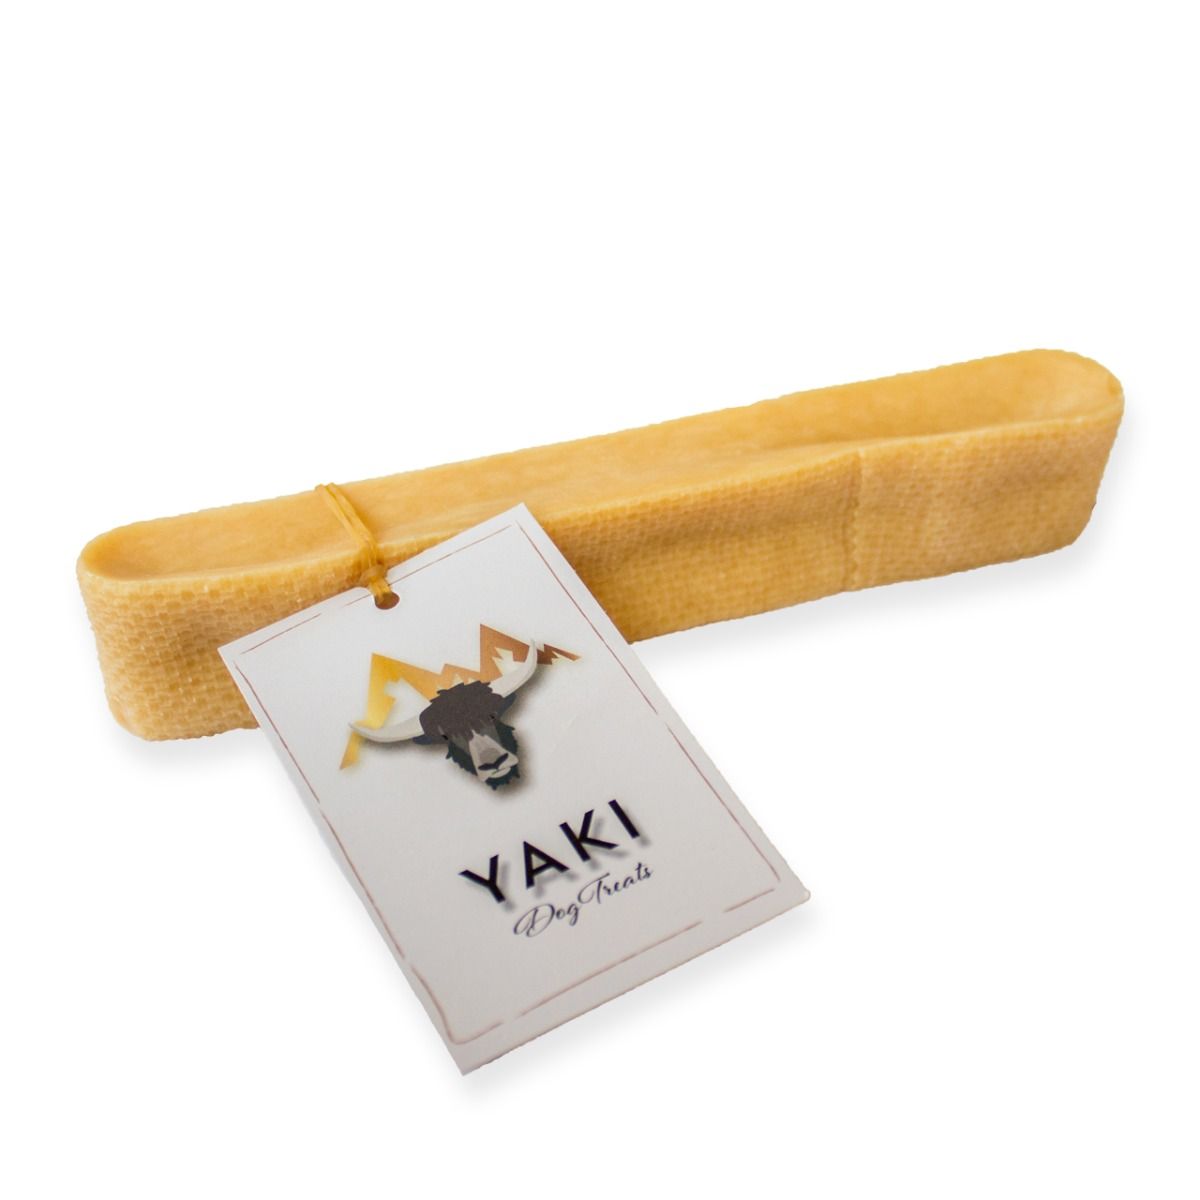 Yaki - Cheese Dog snack 140-149g XL - (01-503) - Kjæledyr og utstyr